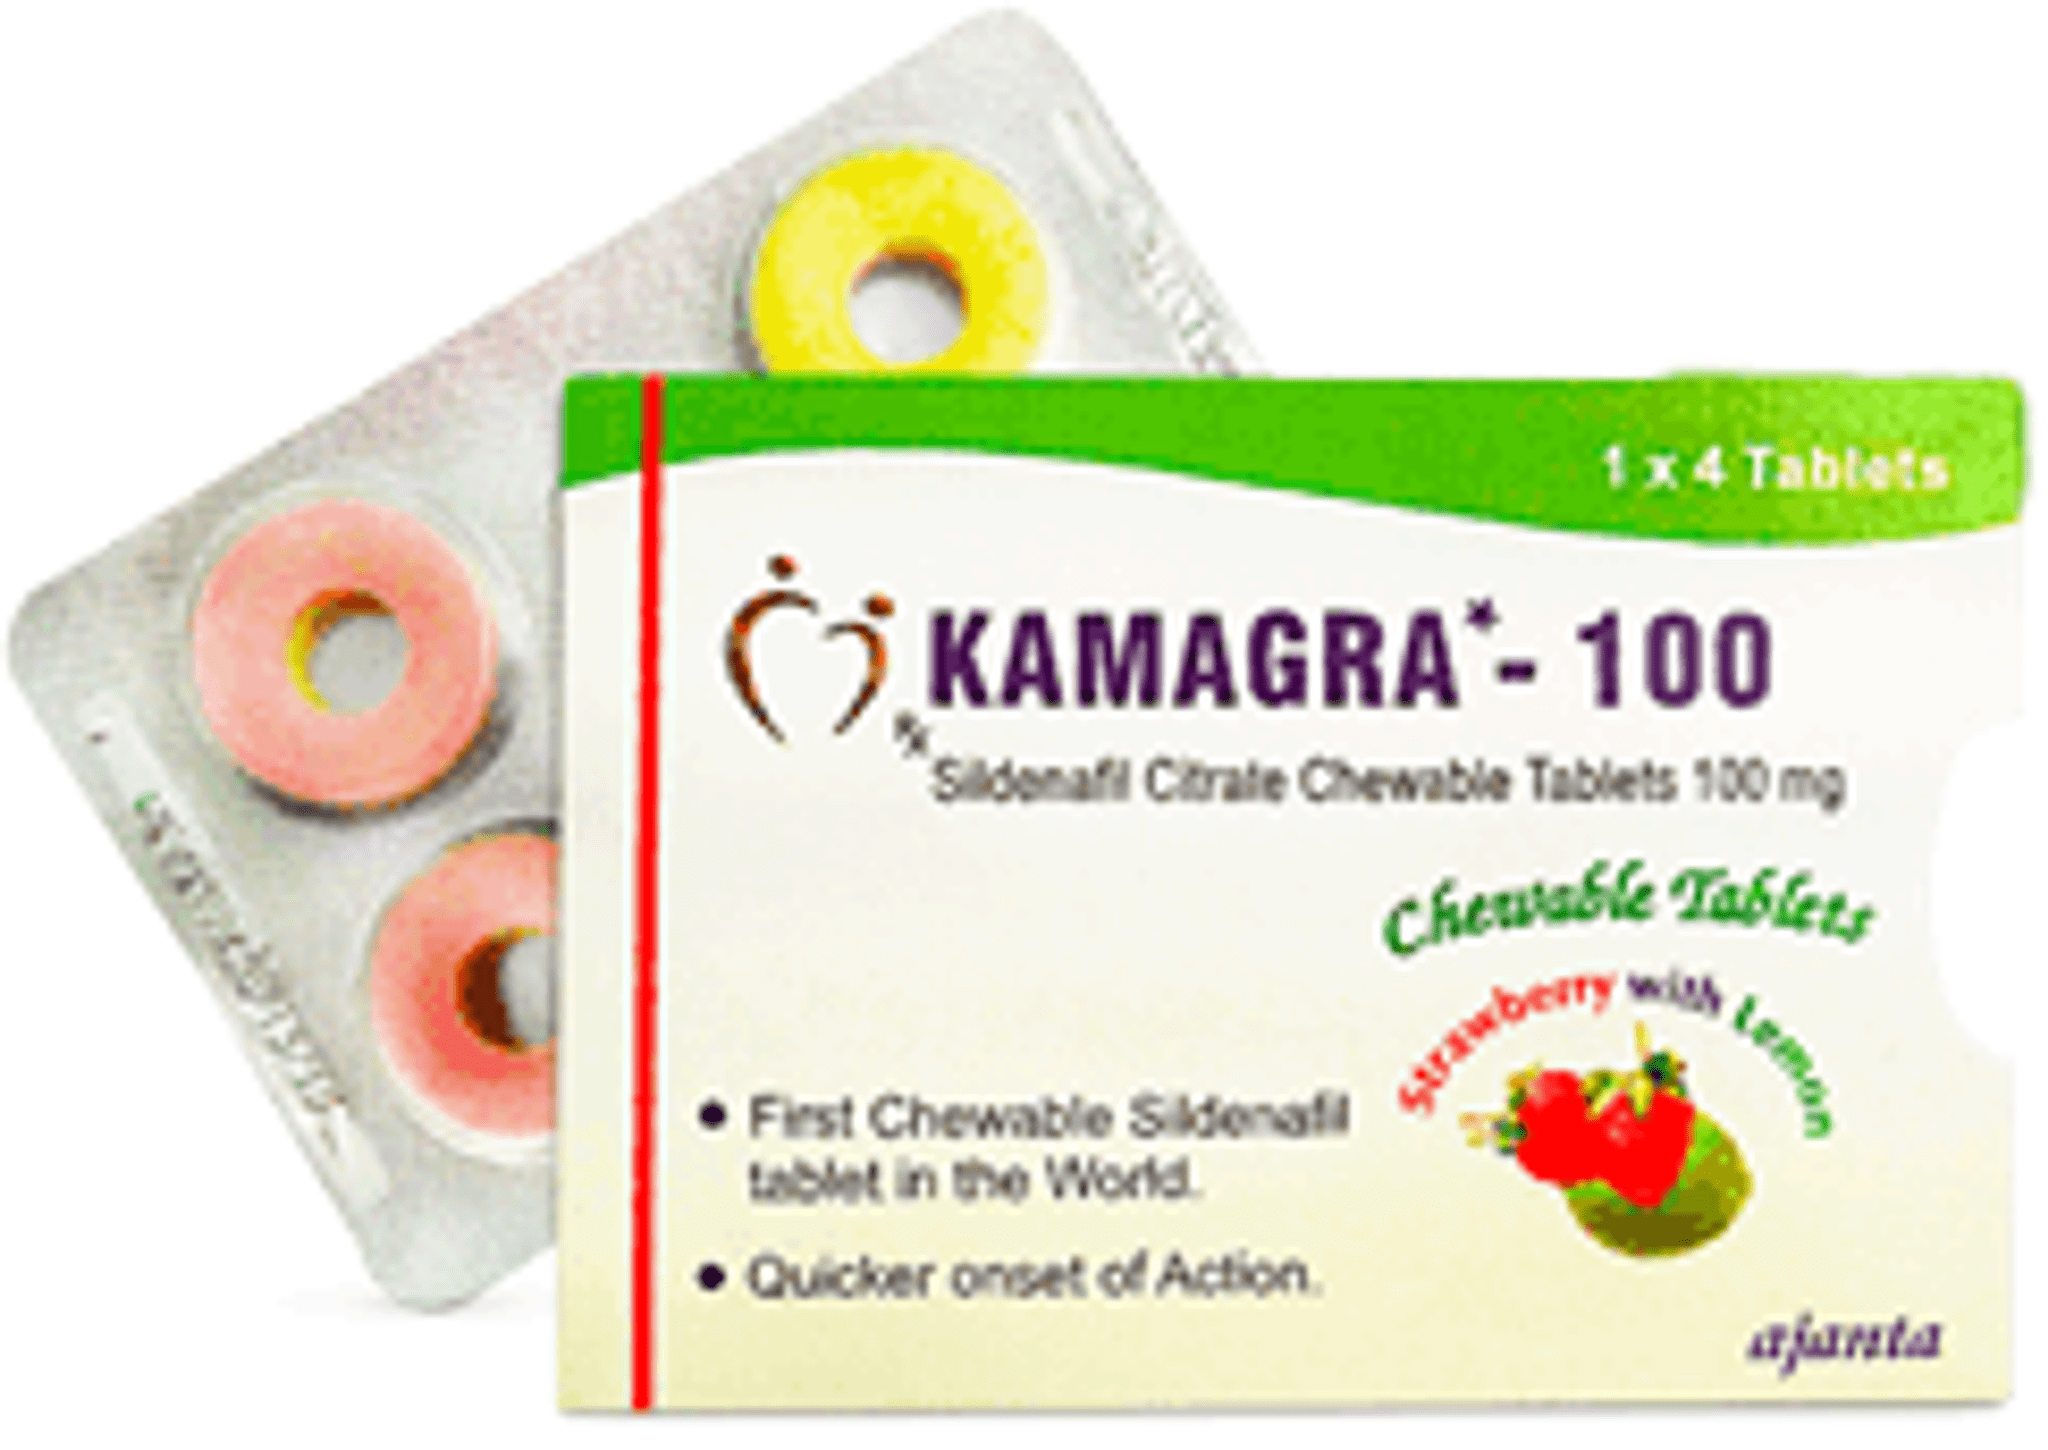 Ajanta Kamagra gelée orale original - 100 mg - Vitamine c à prix